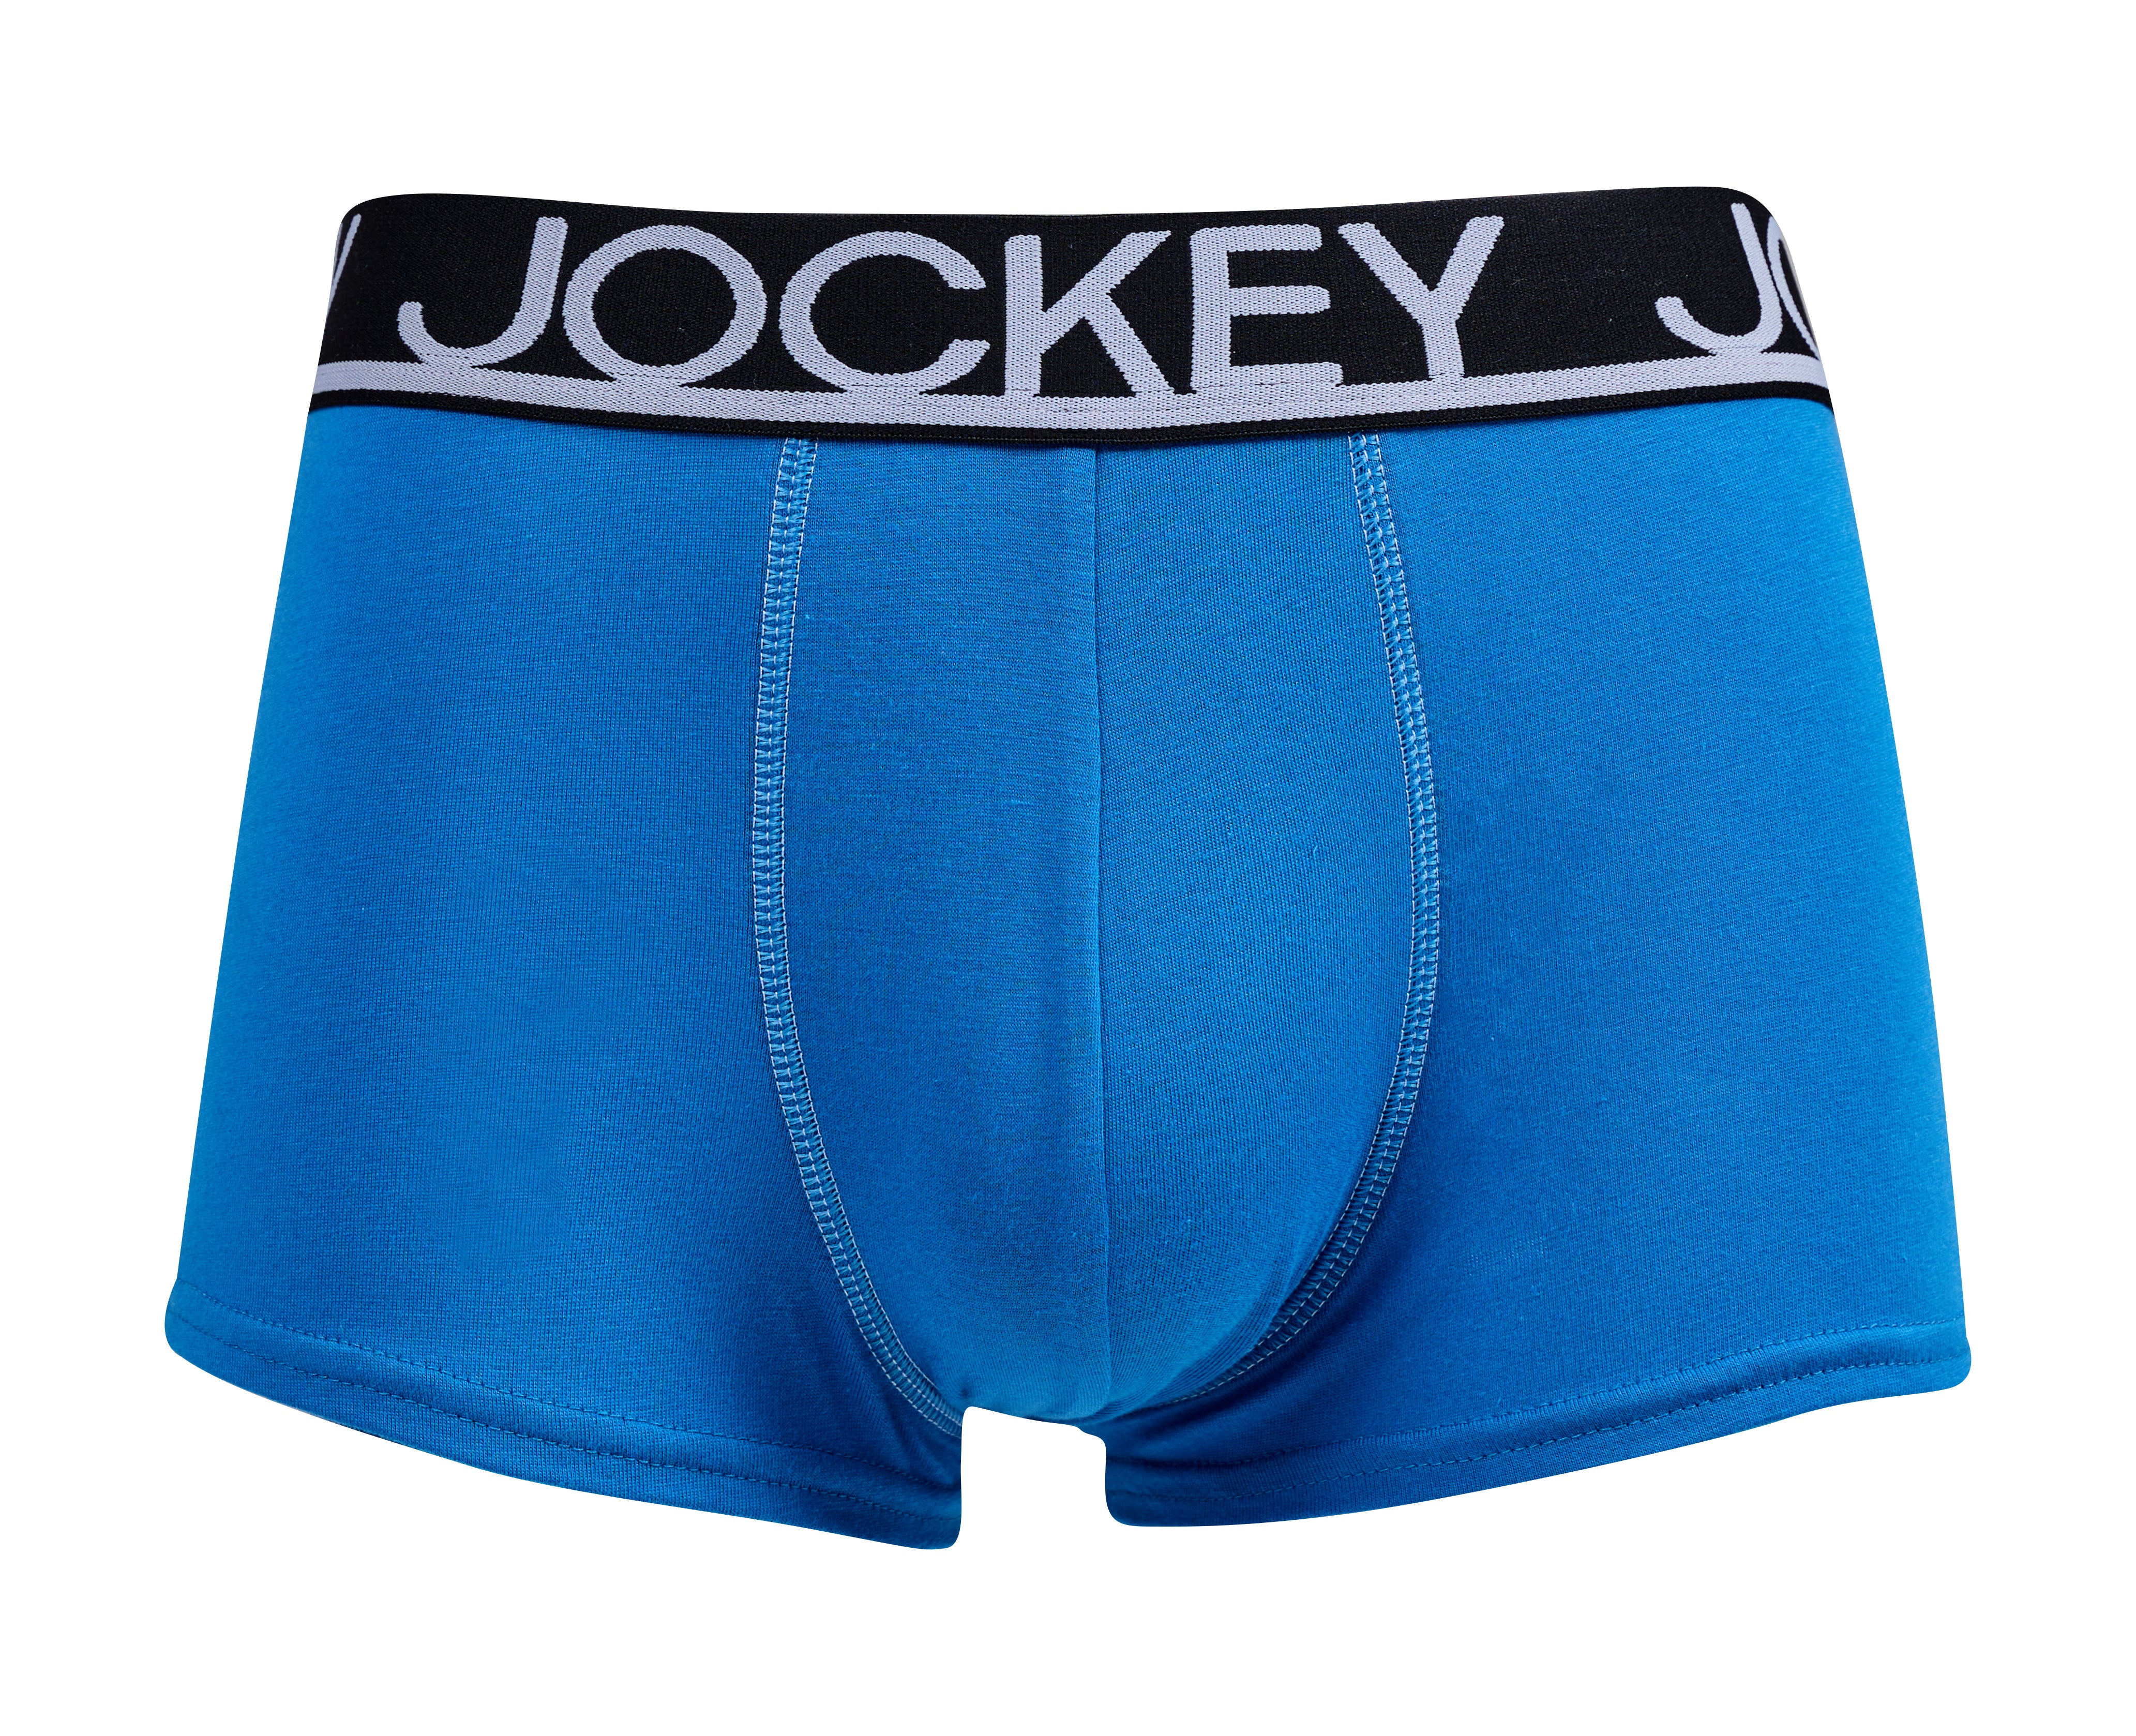 Jockey Men's Underwear Classic Big Man Brief- 2 Pack